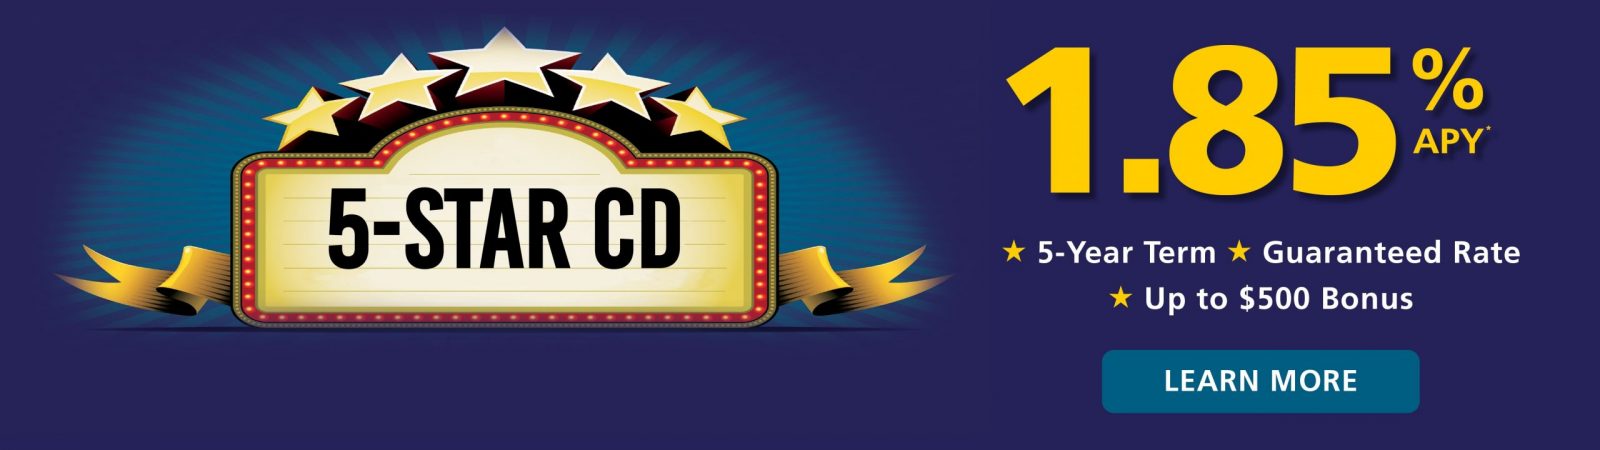 5 Star CD banner ad